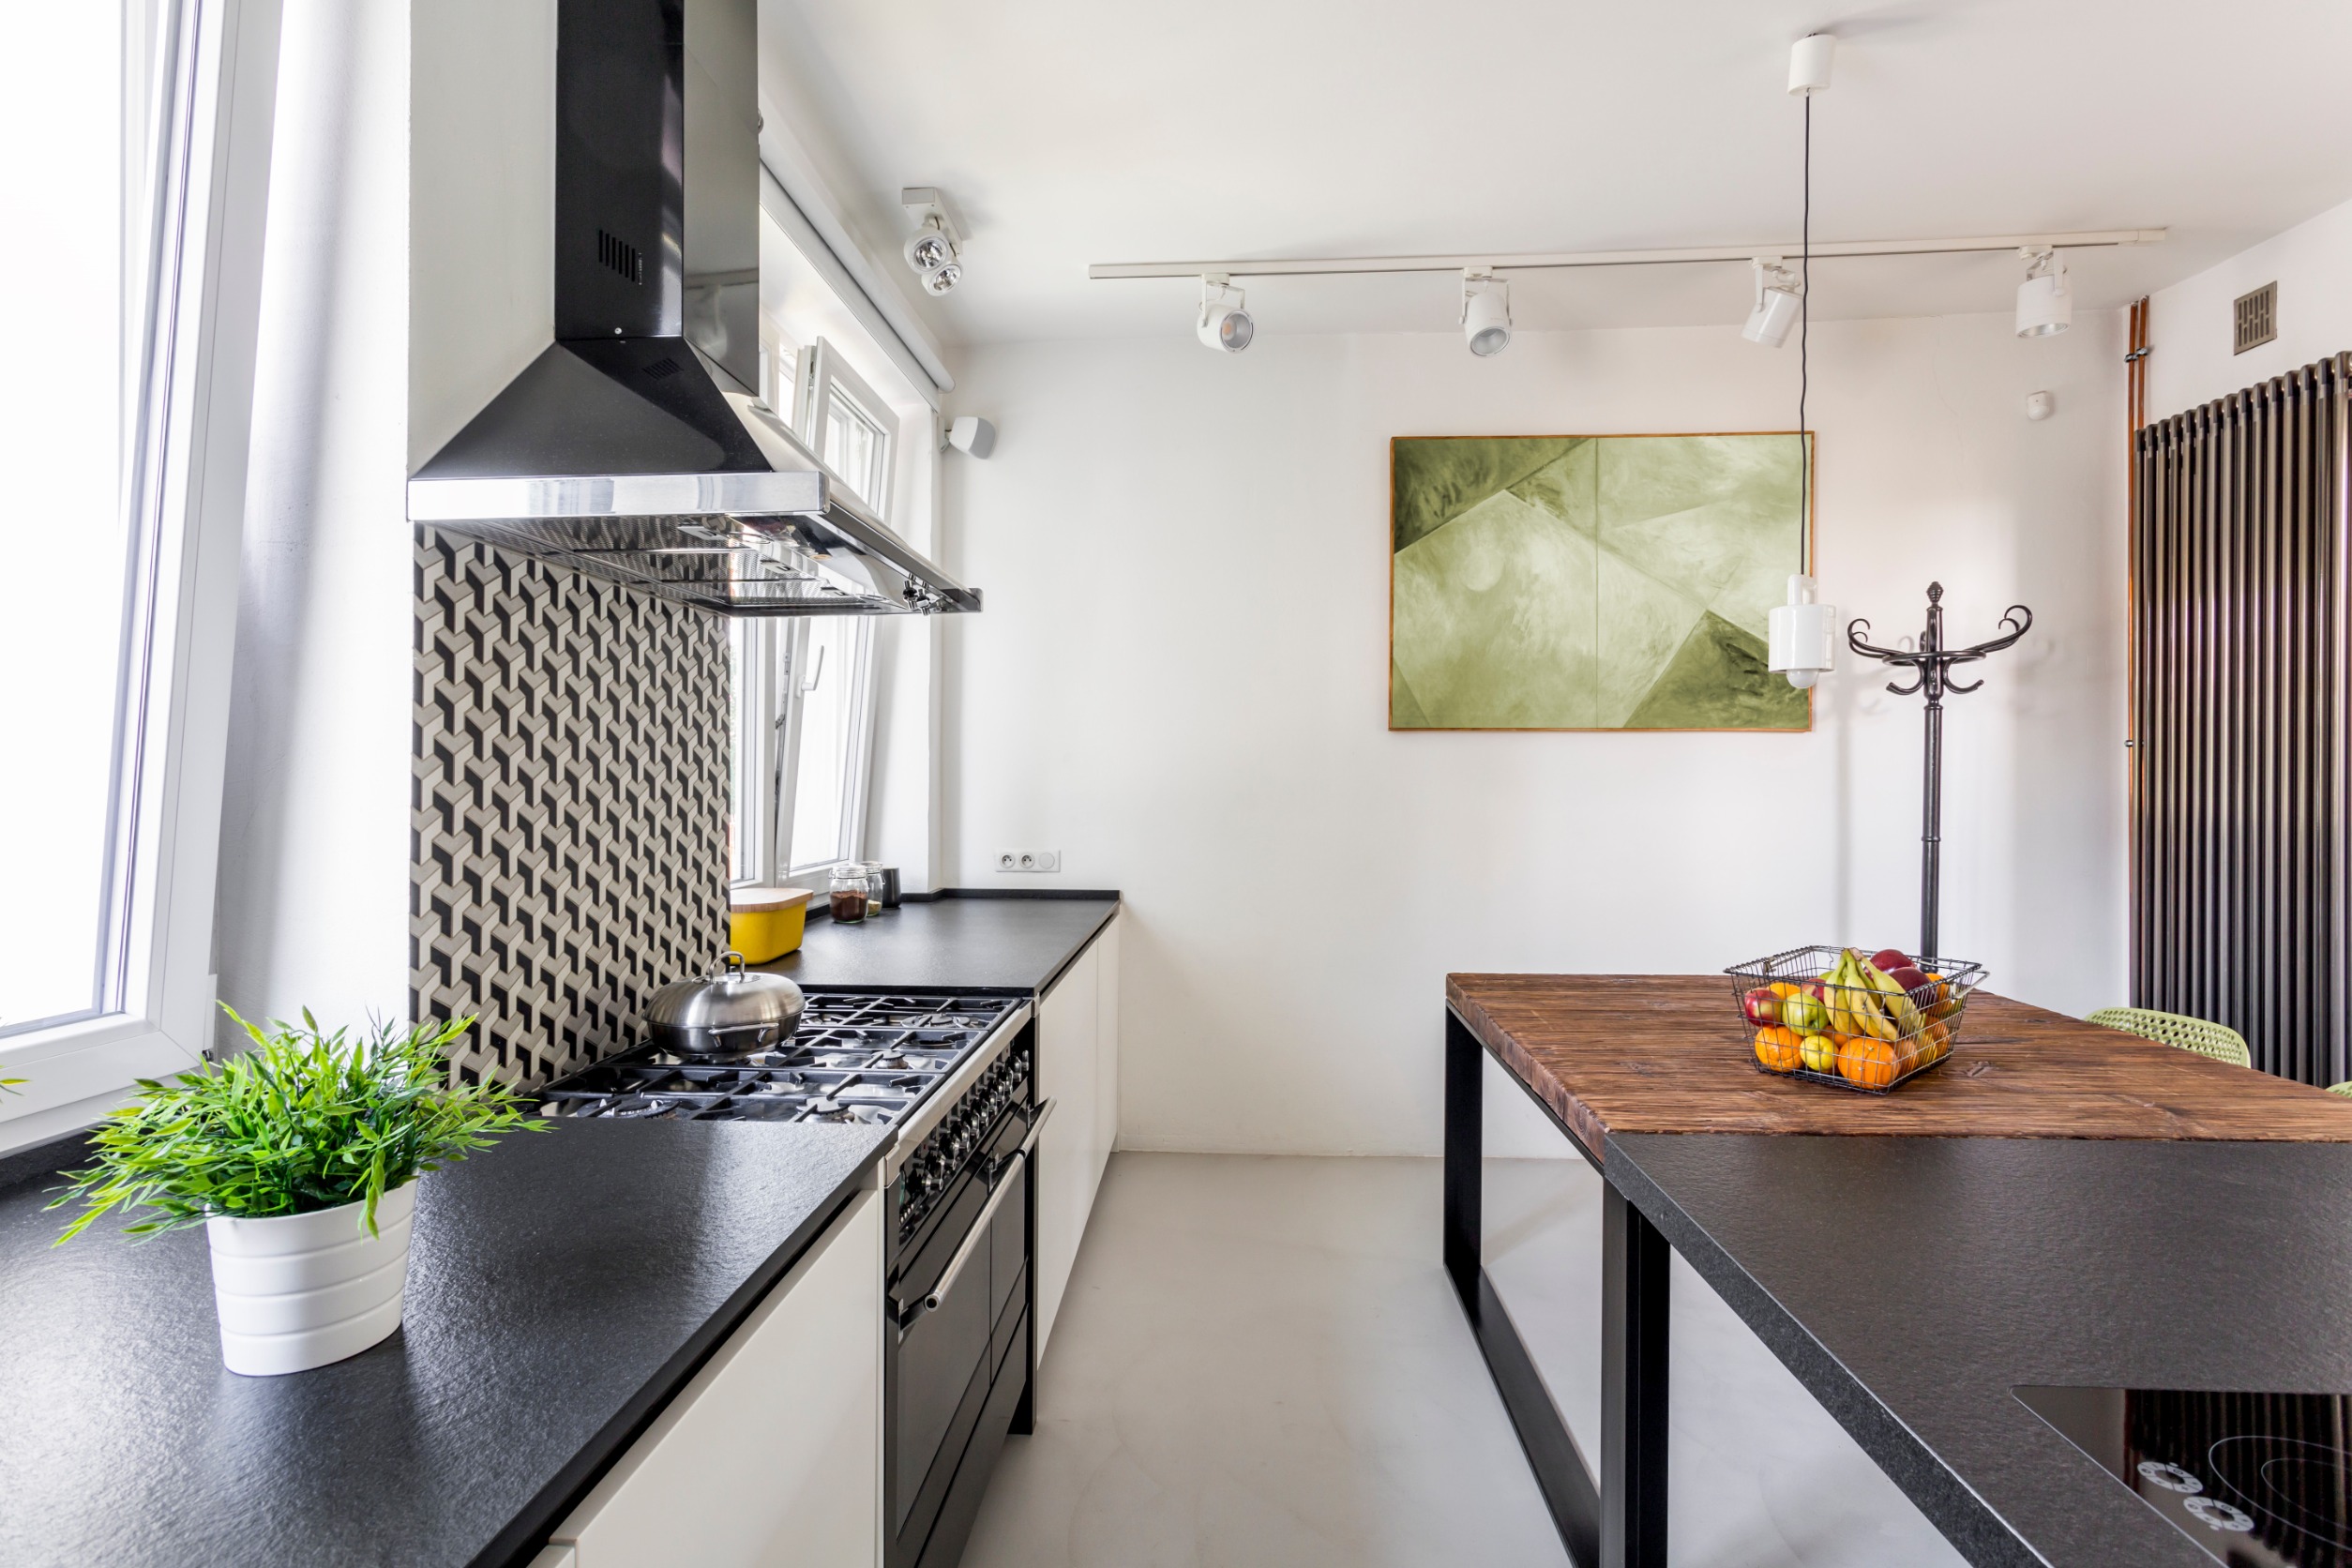 Modern, Scandinavian-inspired kitchen